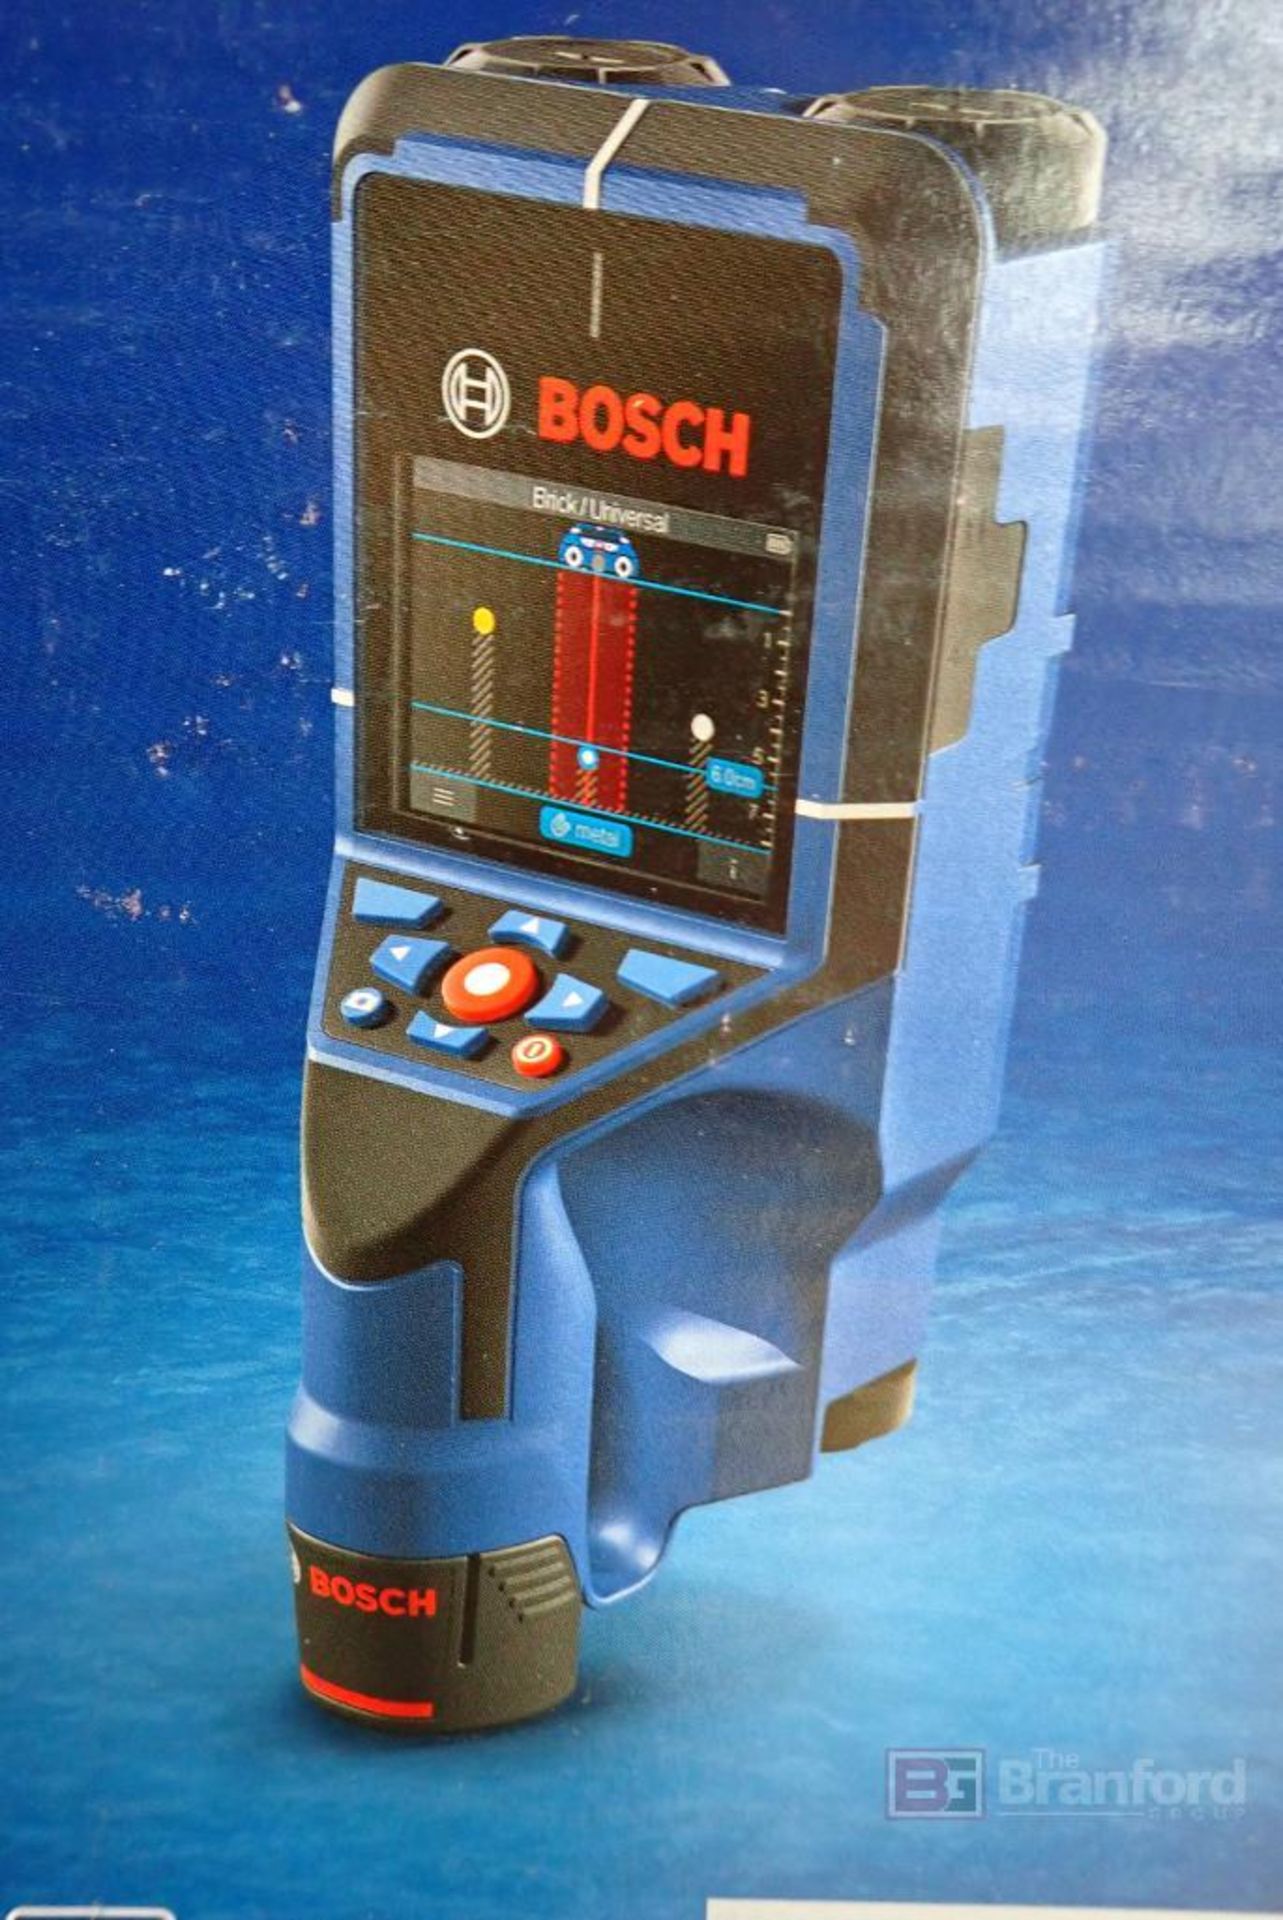 Bosch D-tect200C Wallscanner Kit - Image 4 of 5